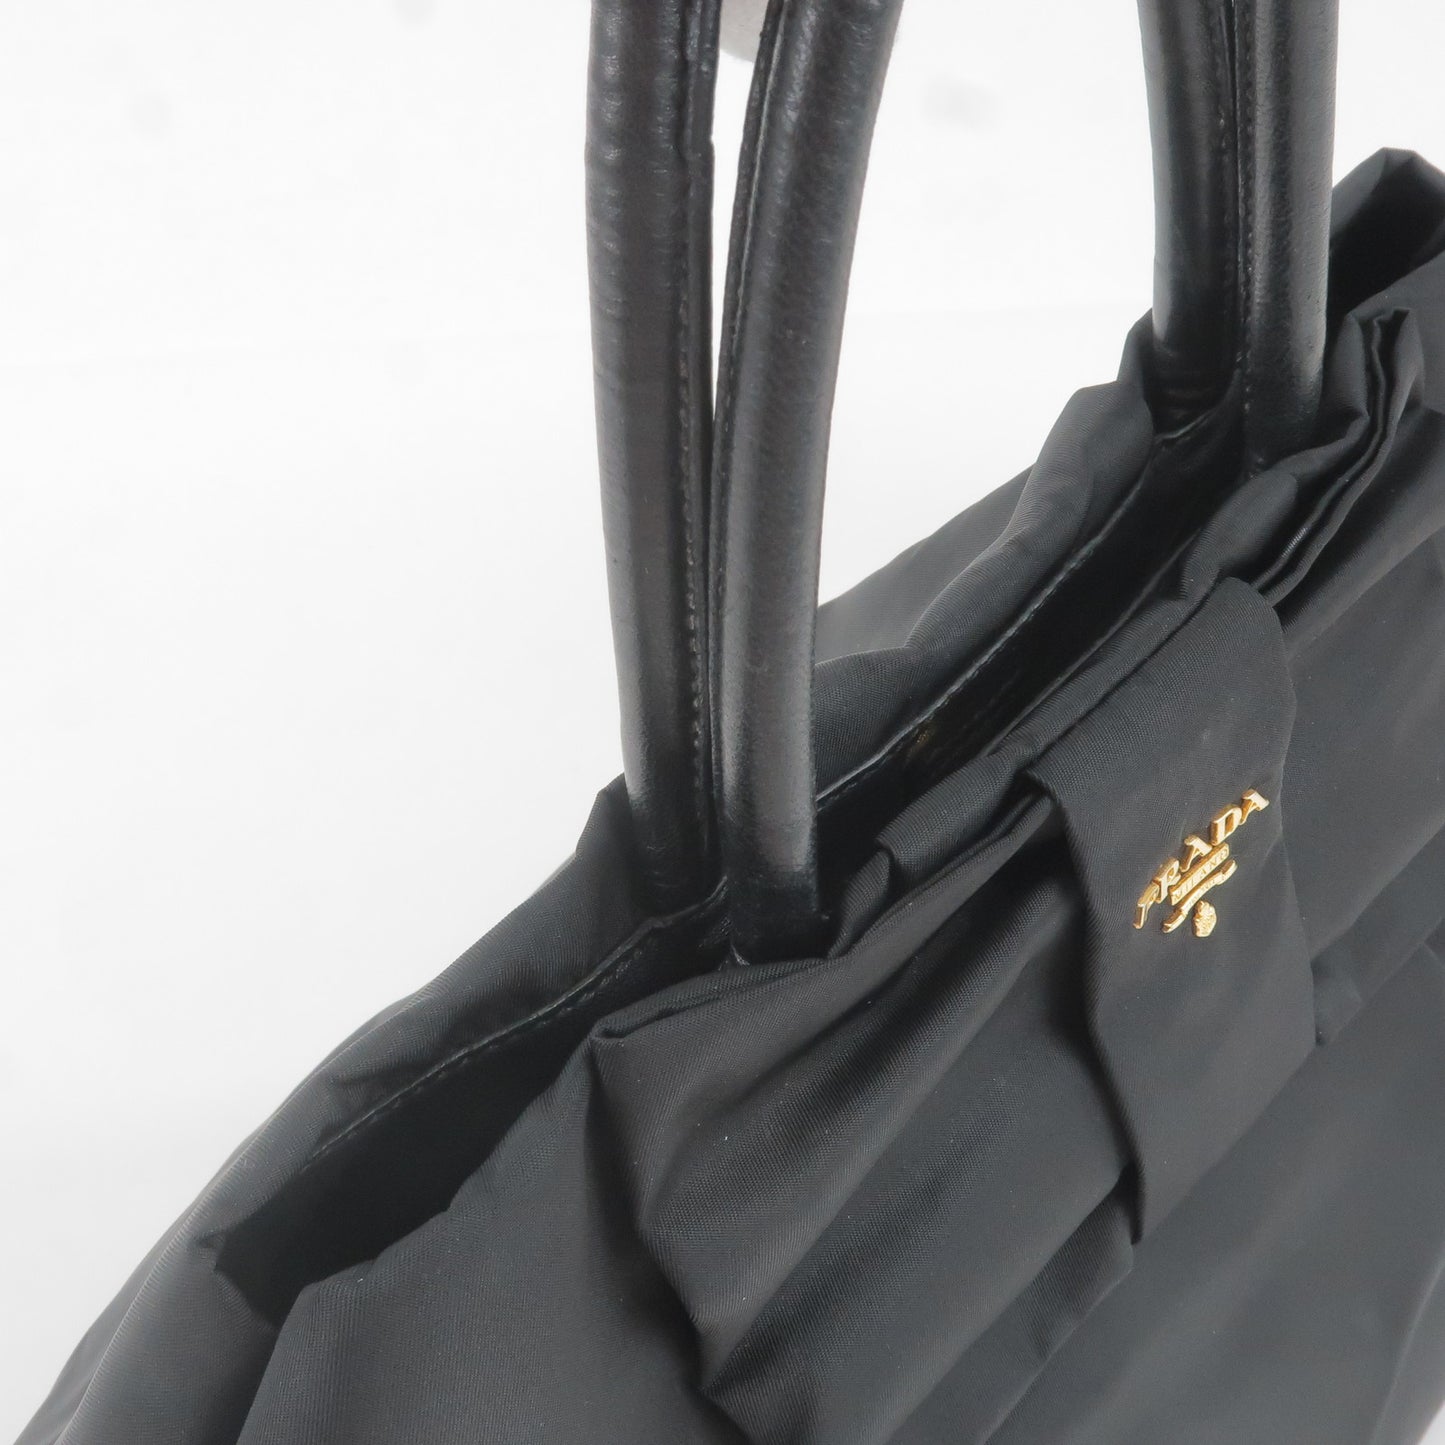 PRADA Nylon Leather Ribbon Hand Bag NERO Black BN1601